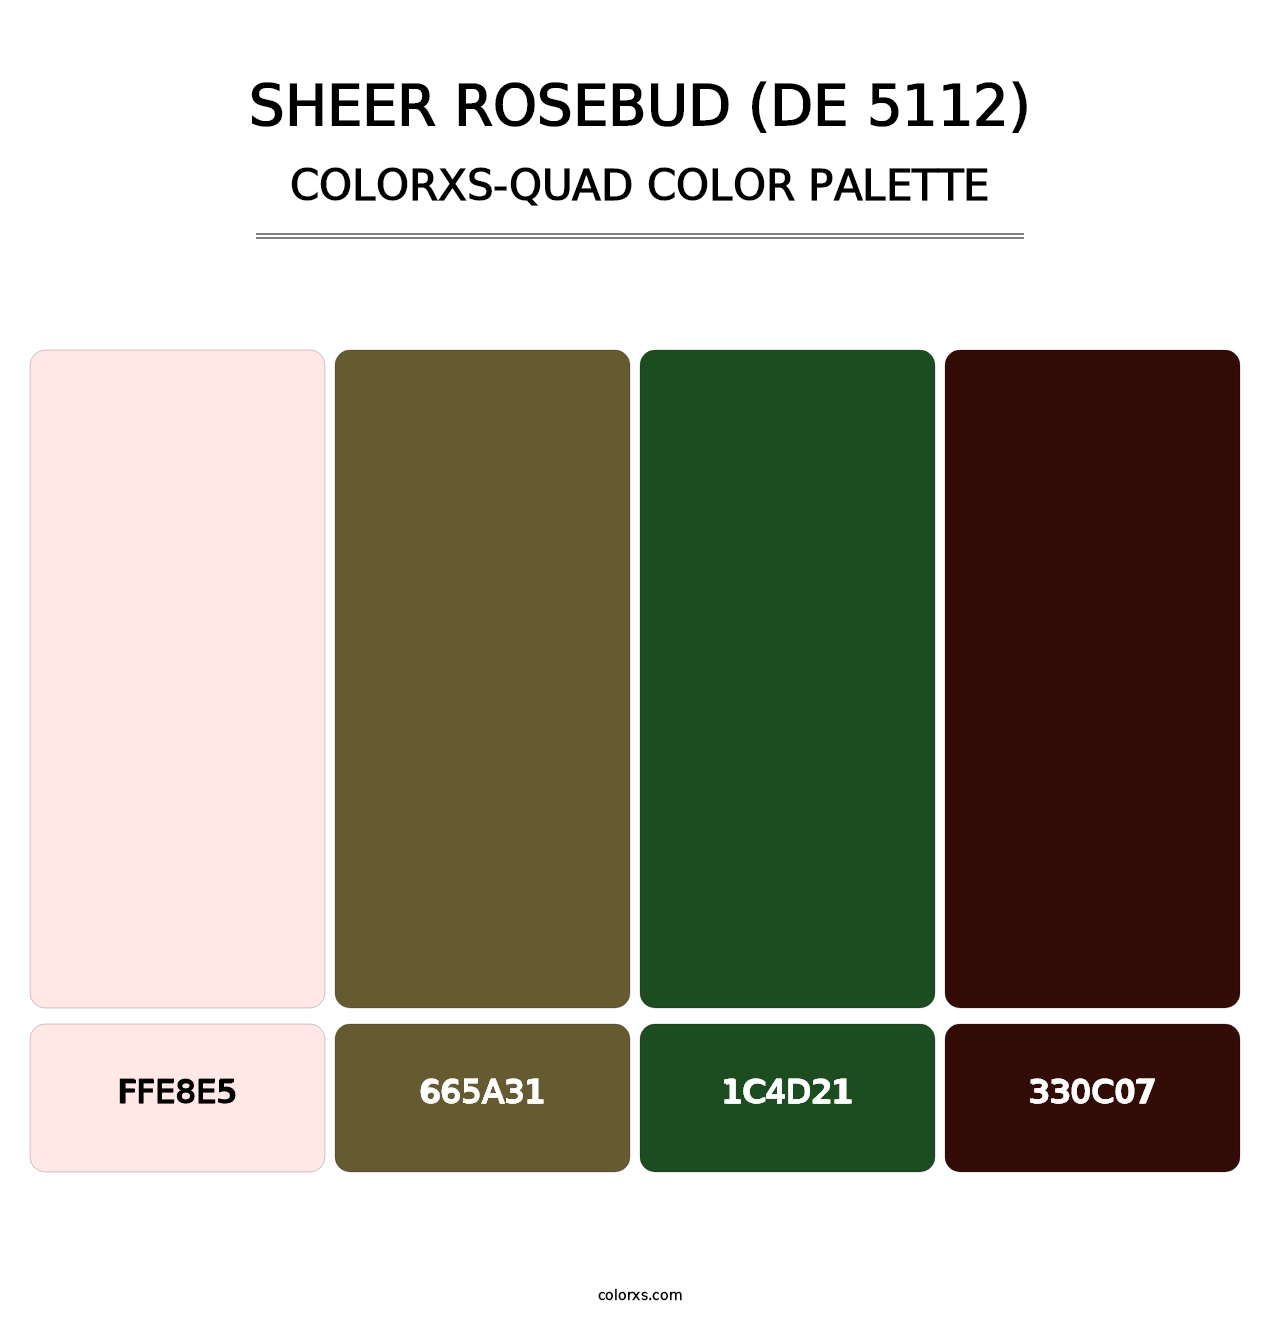 Sheer Rosebud (DE 5112) - Colorxs Quad Palette